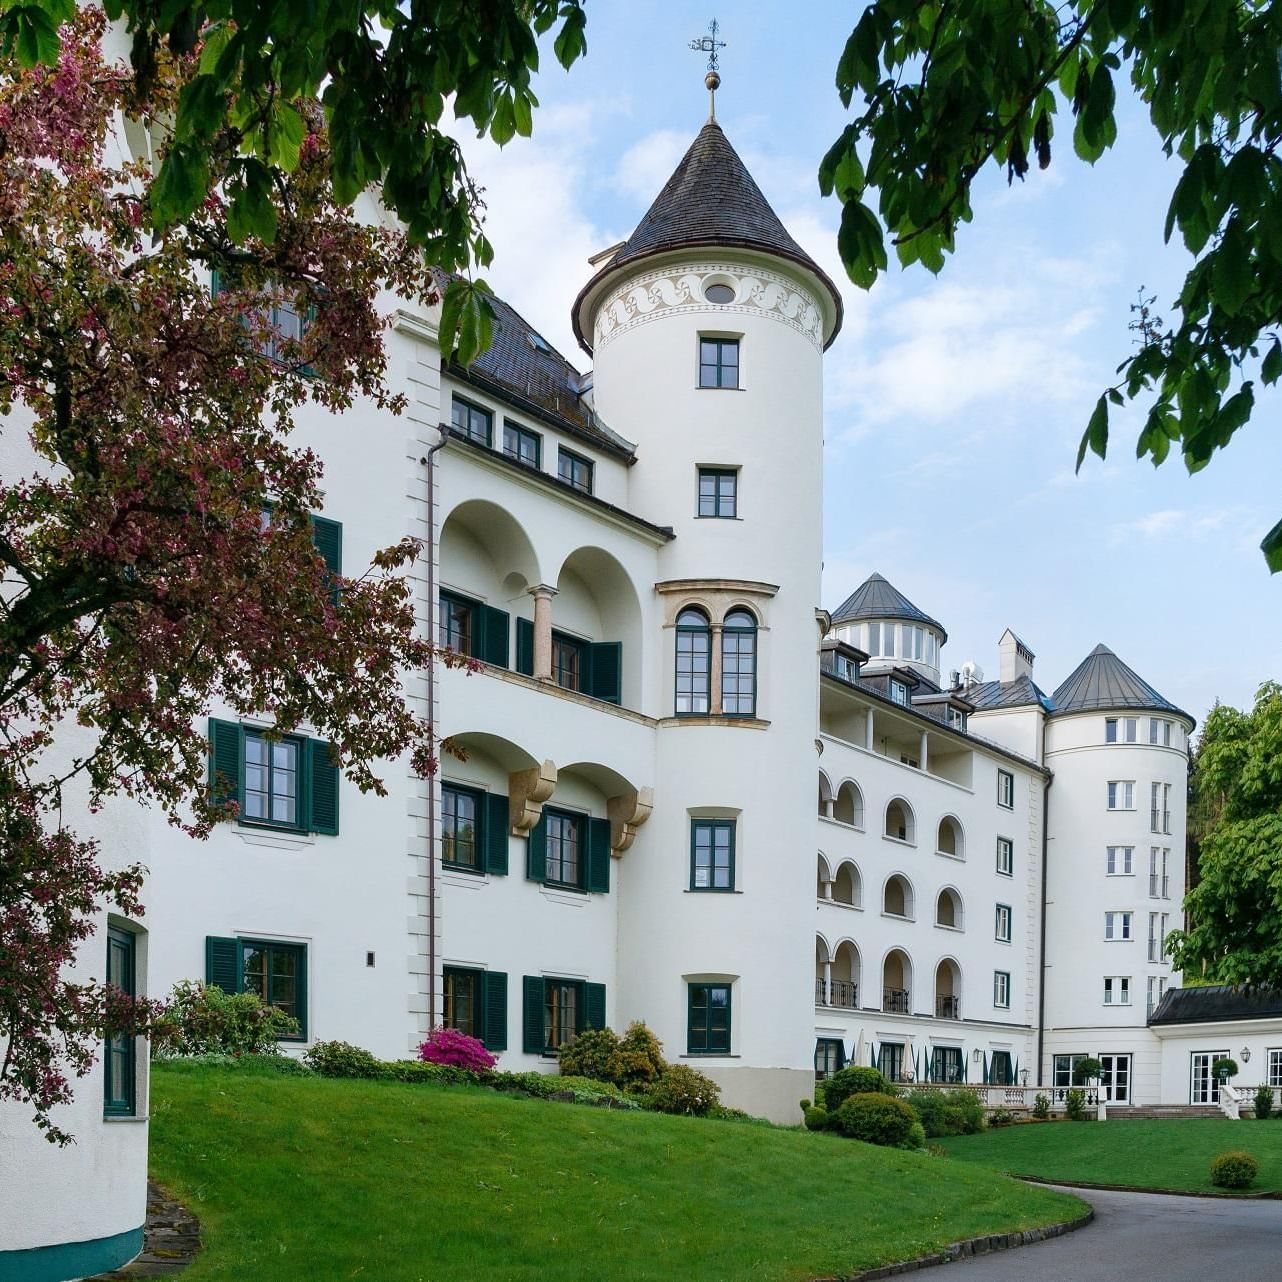 The exterior of Schloss Pichlarn Hotel in Austria